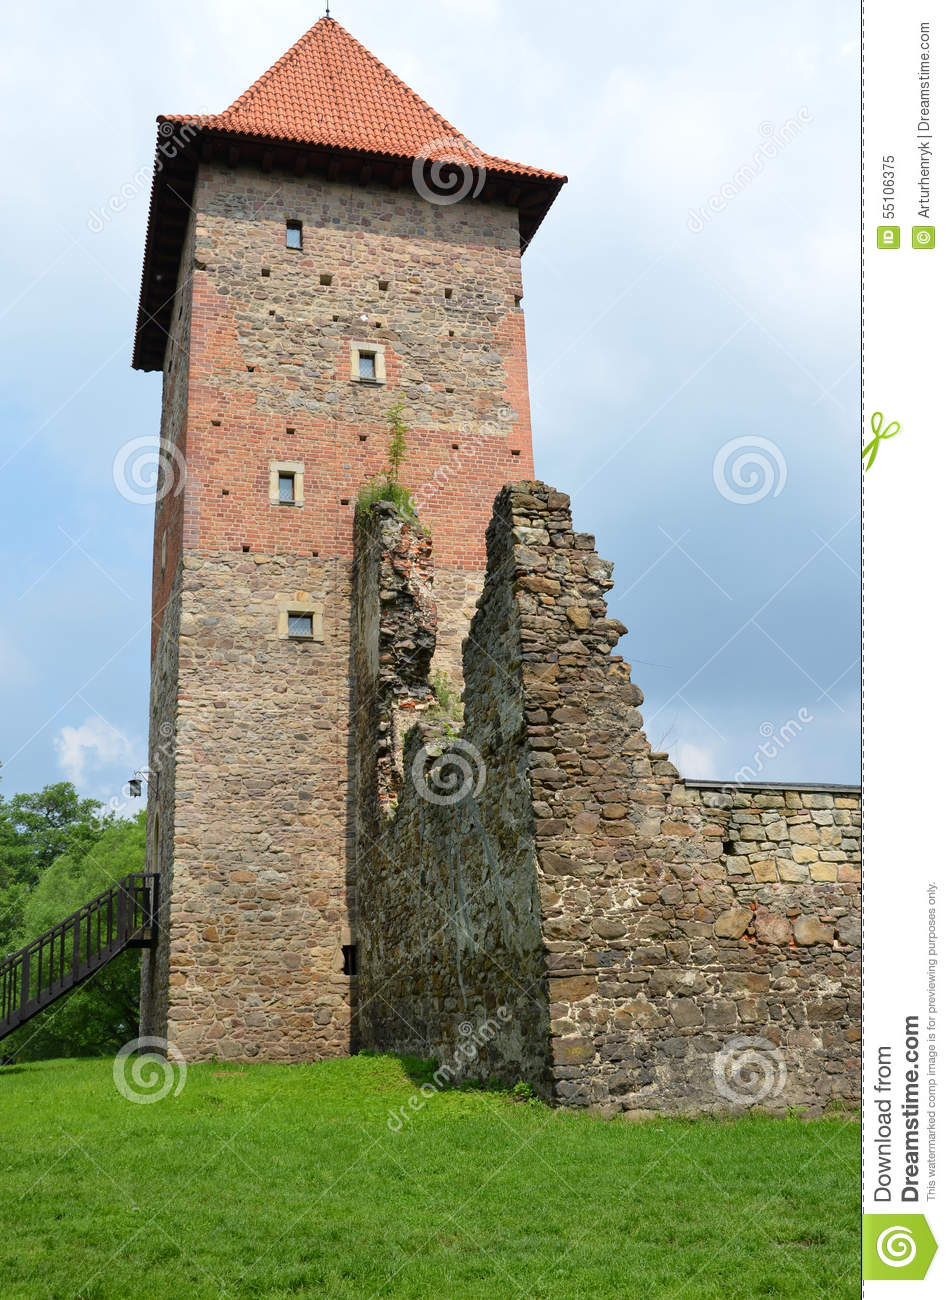 Chudów Castle Backgrounds on Wallpapers Vista